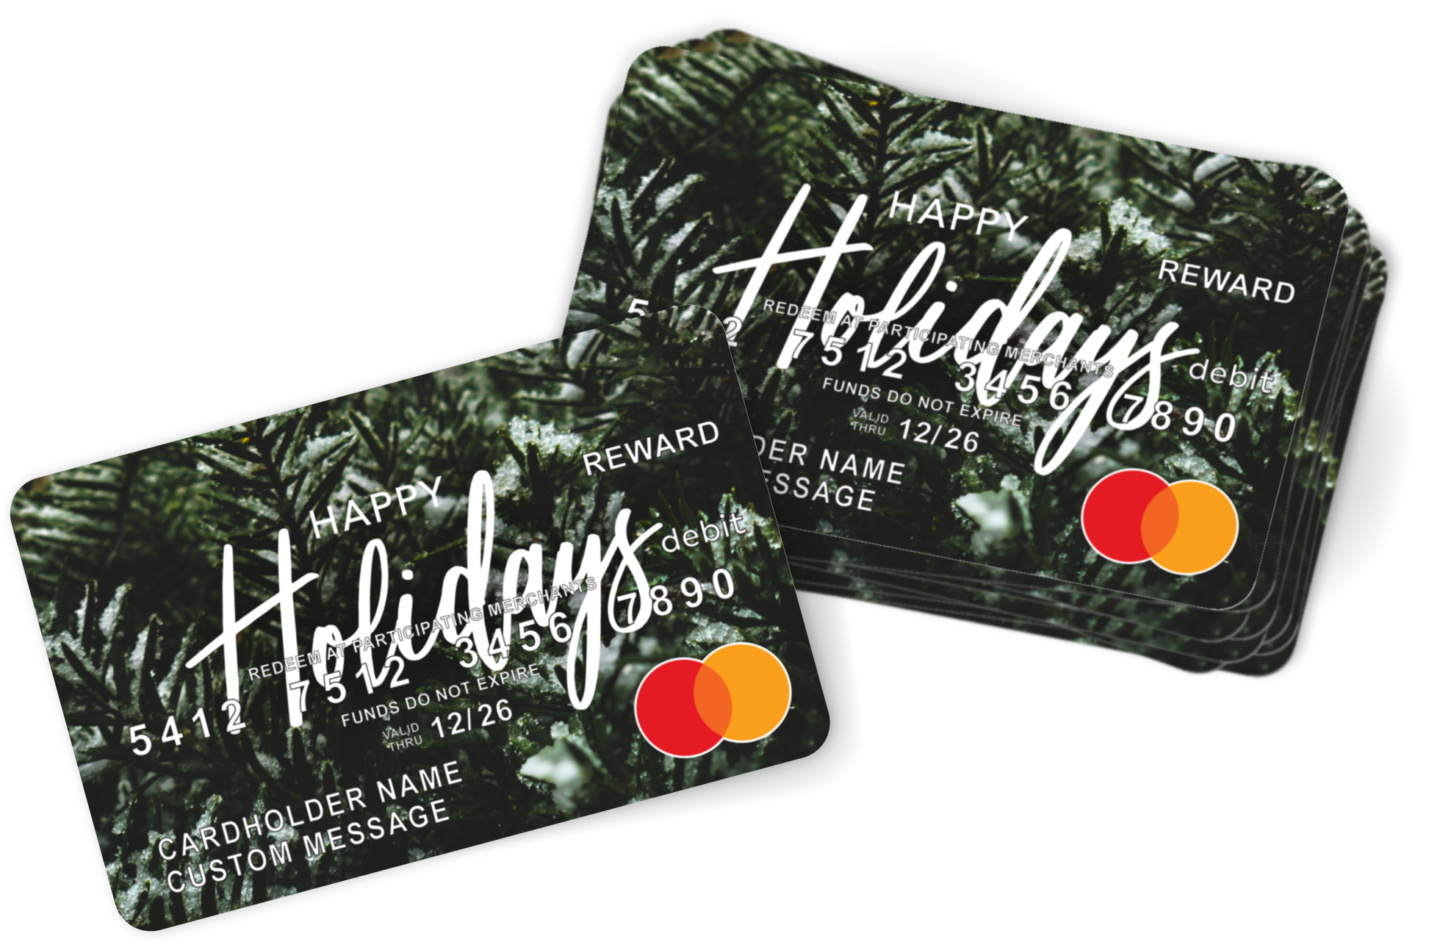 MAX Prepaid Mastercard for Holidays